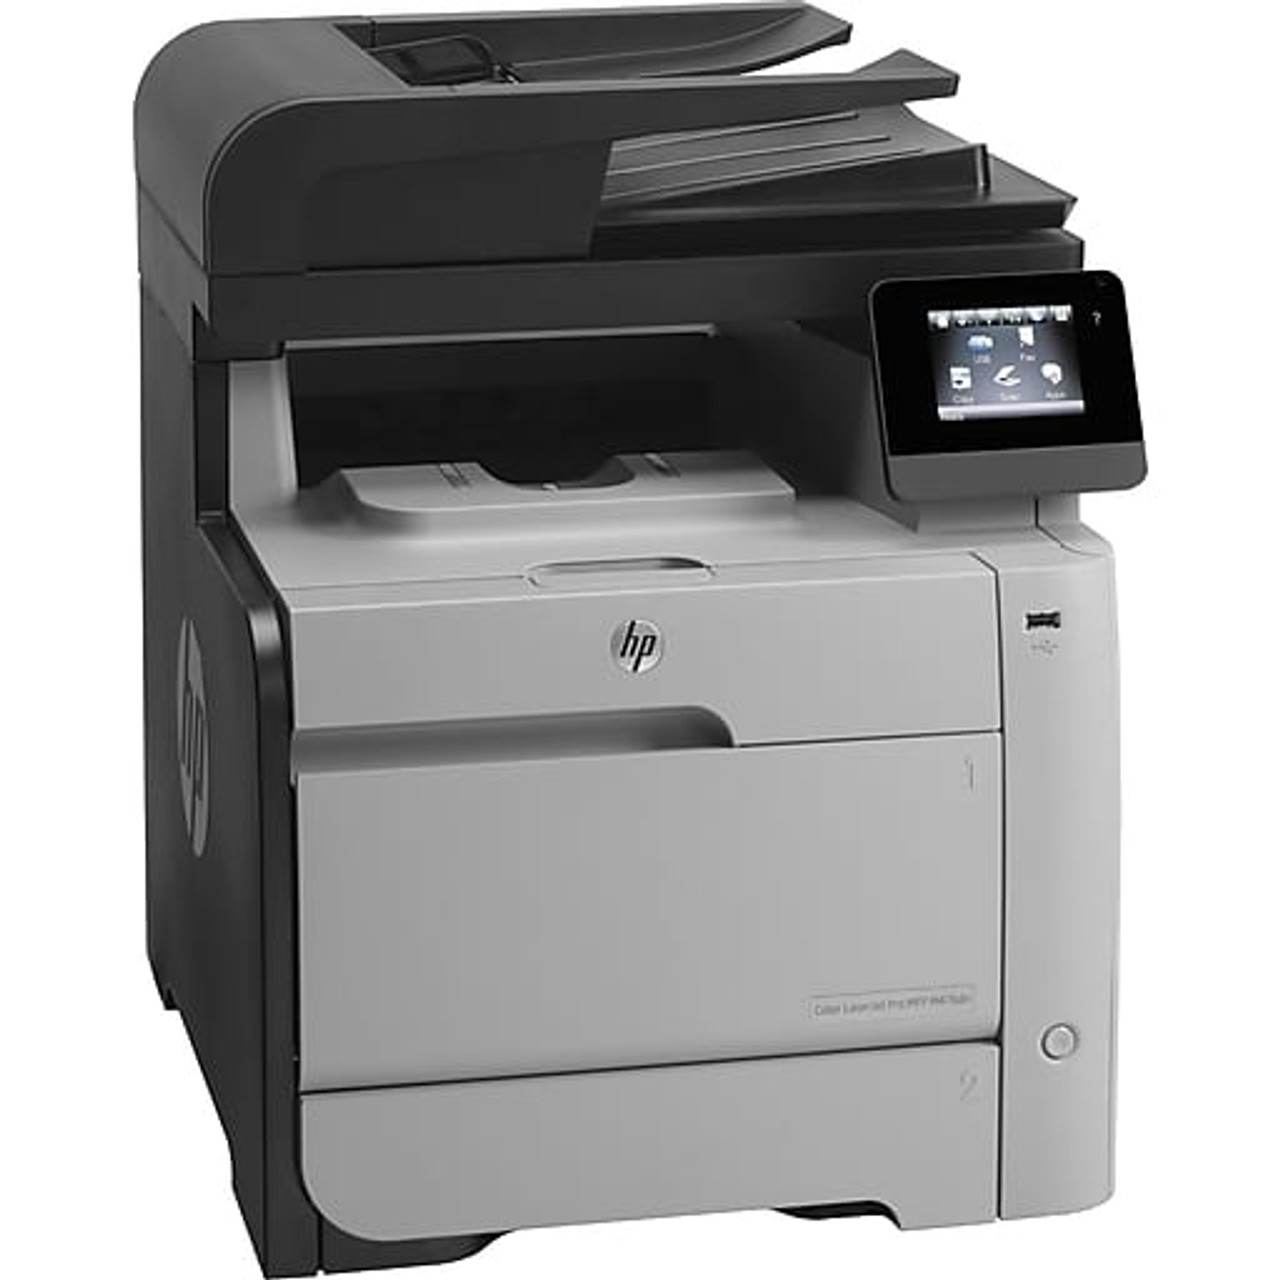 HP LaserJet Pro M476dn MFP - CF386A - HP Laser Printer for sale